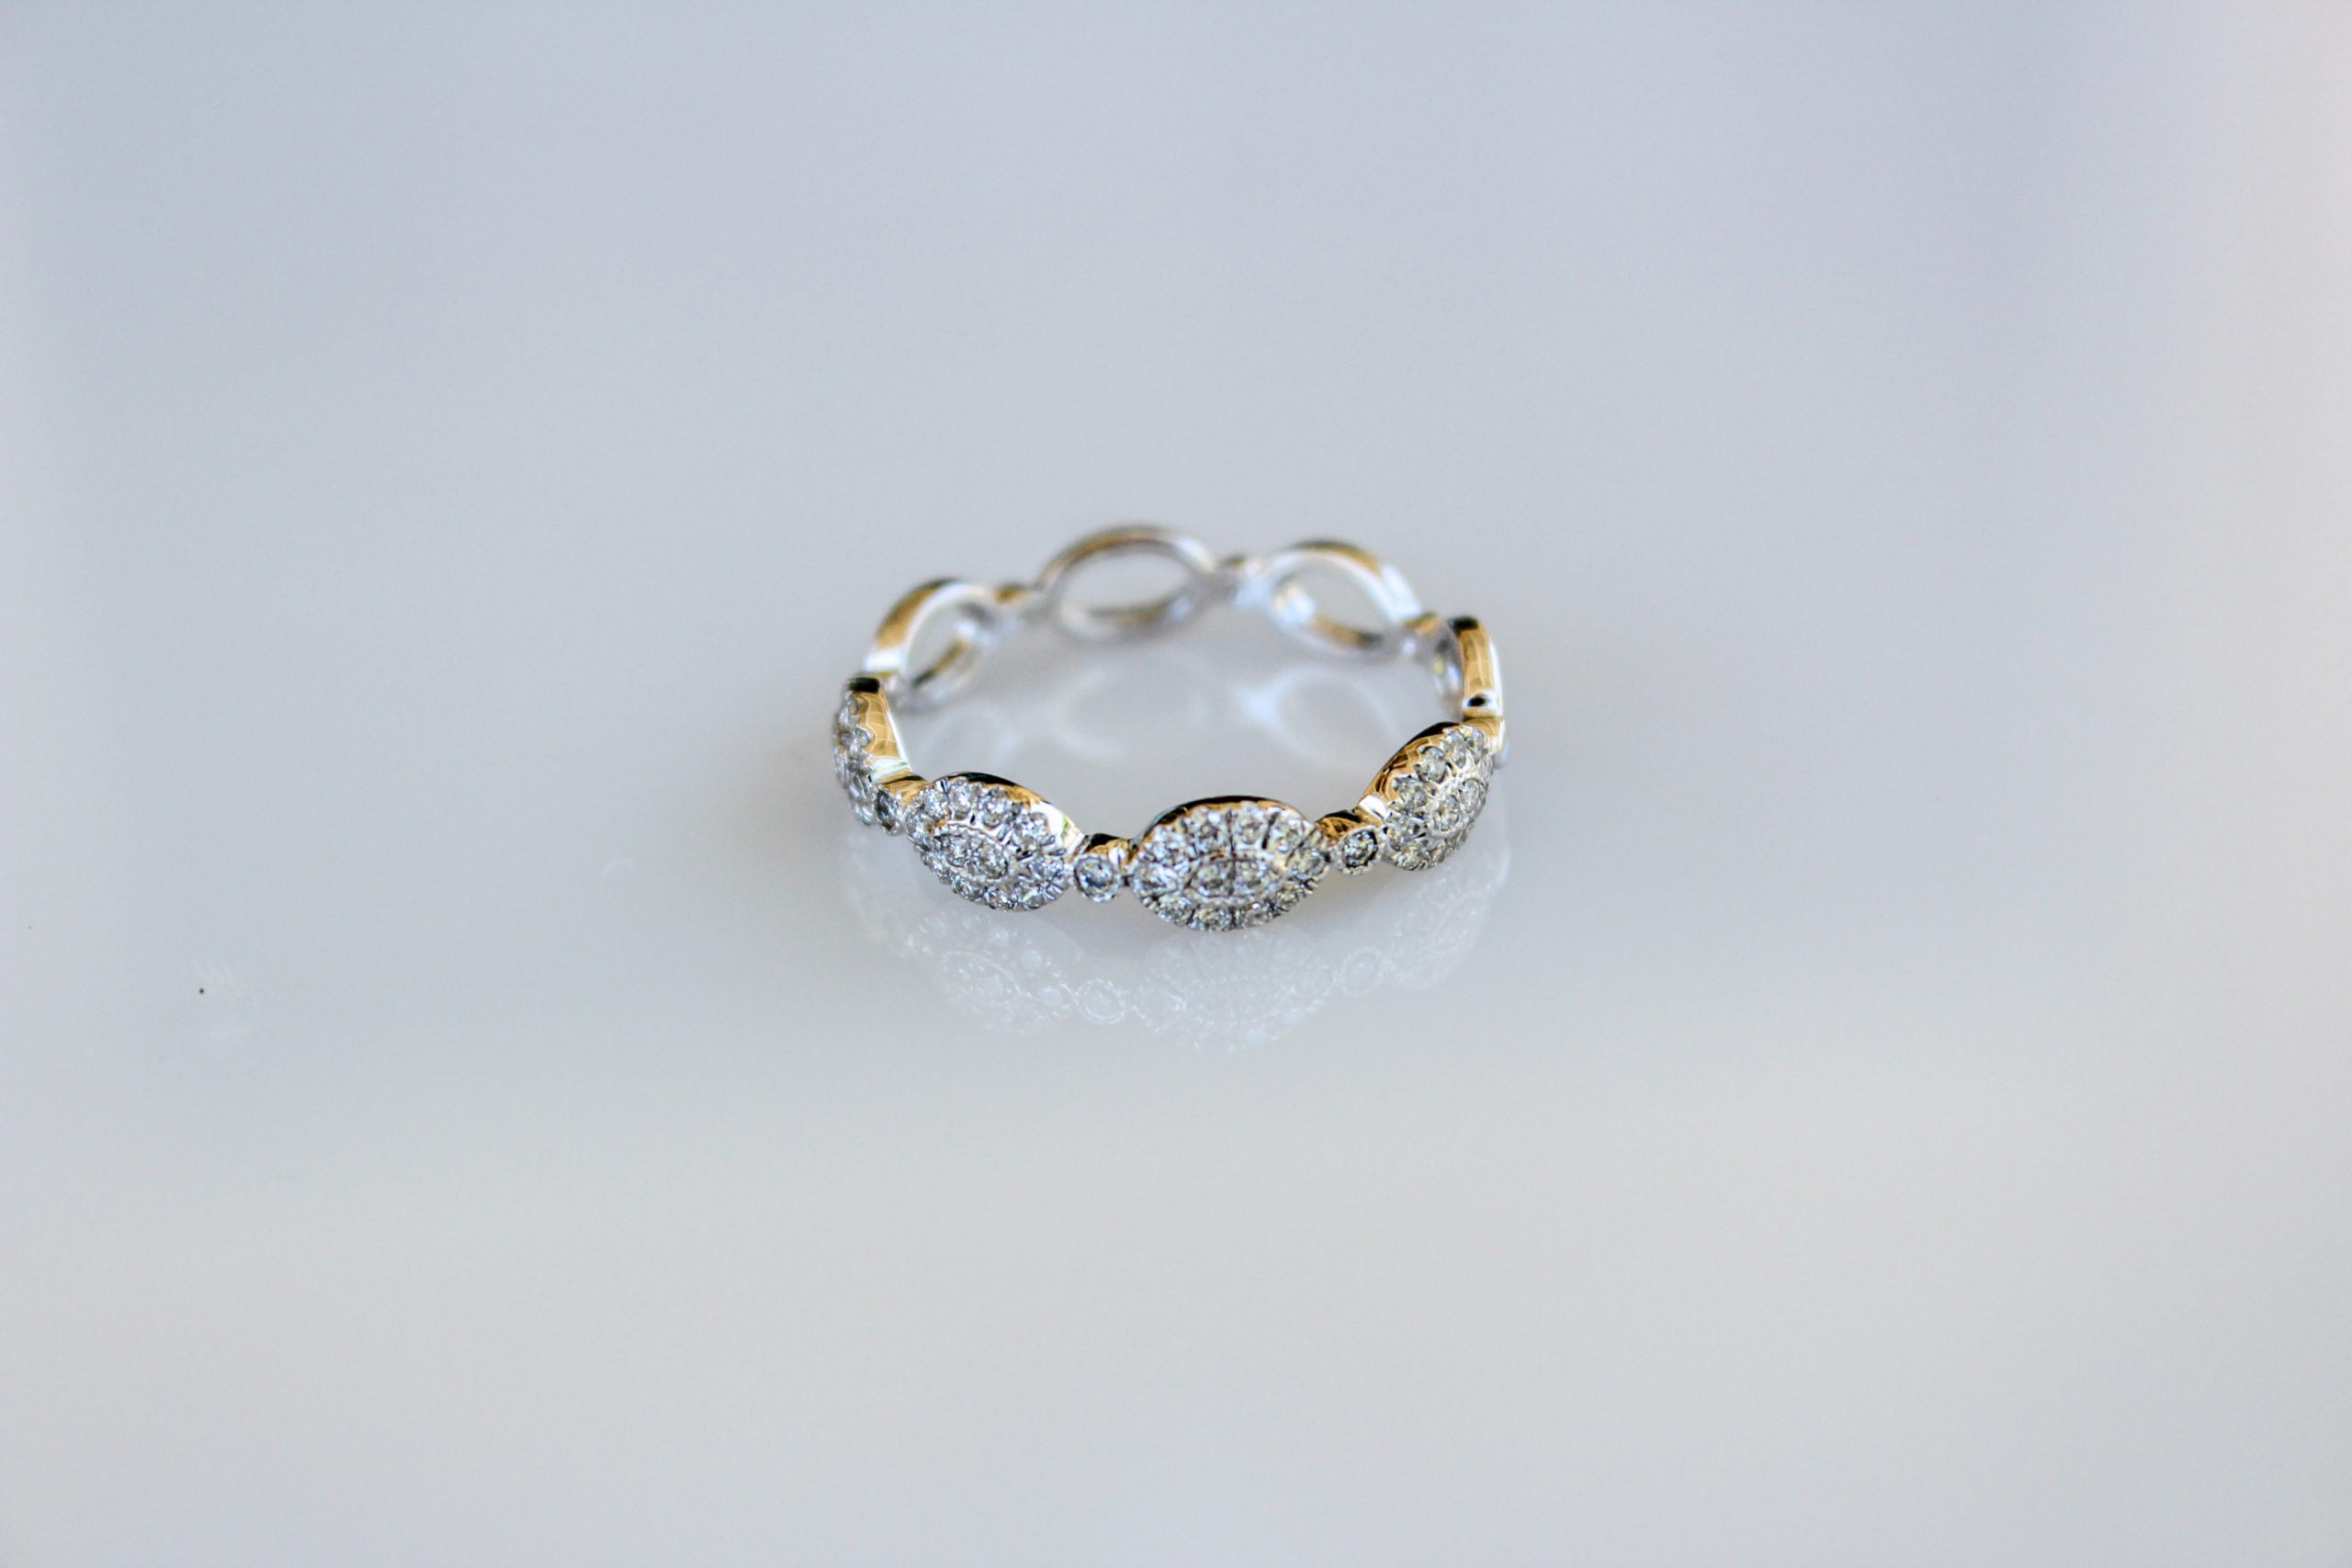 14K White Gold Diamond Stackable Ring